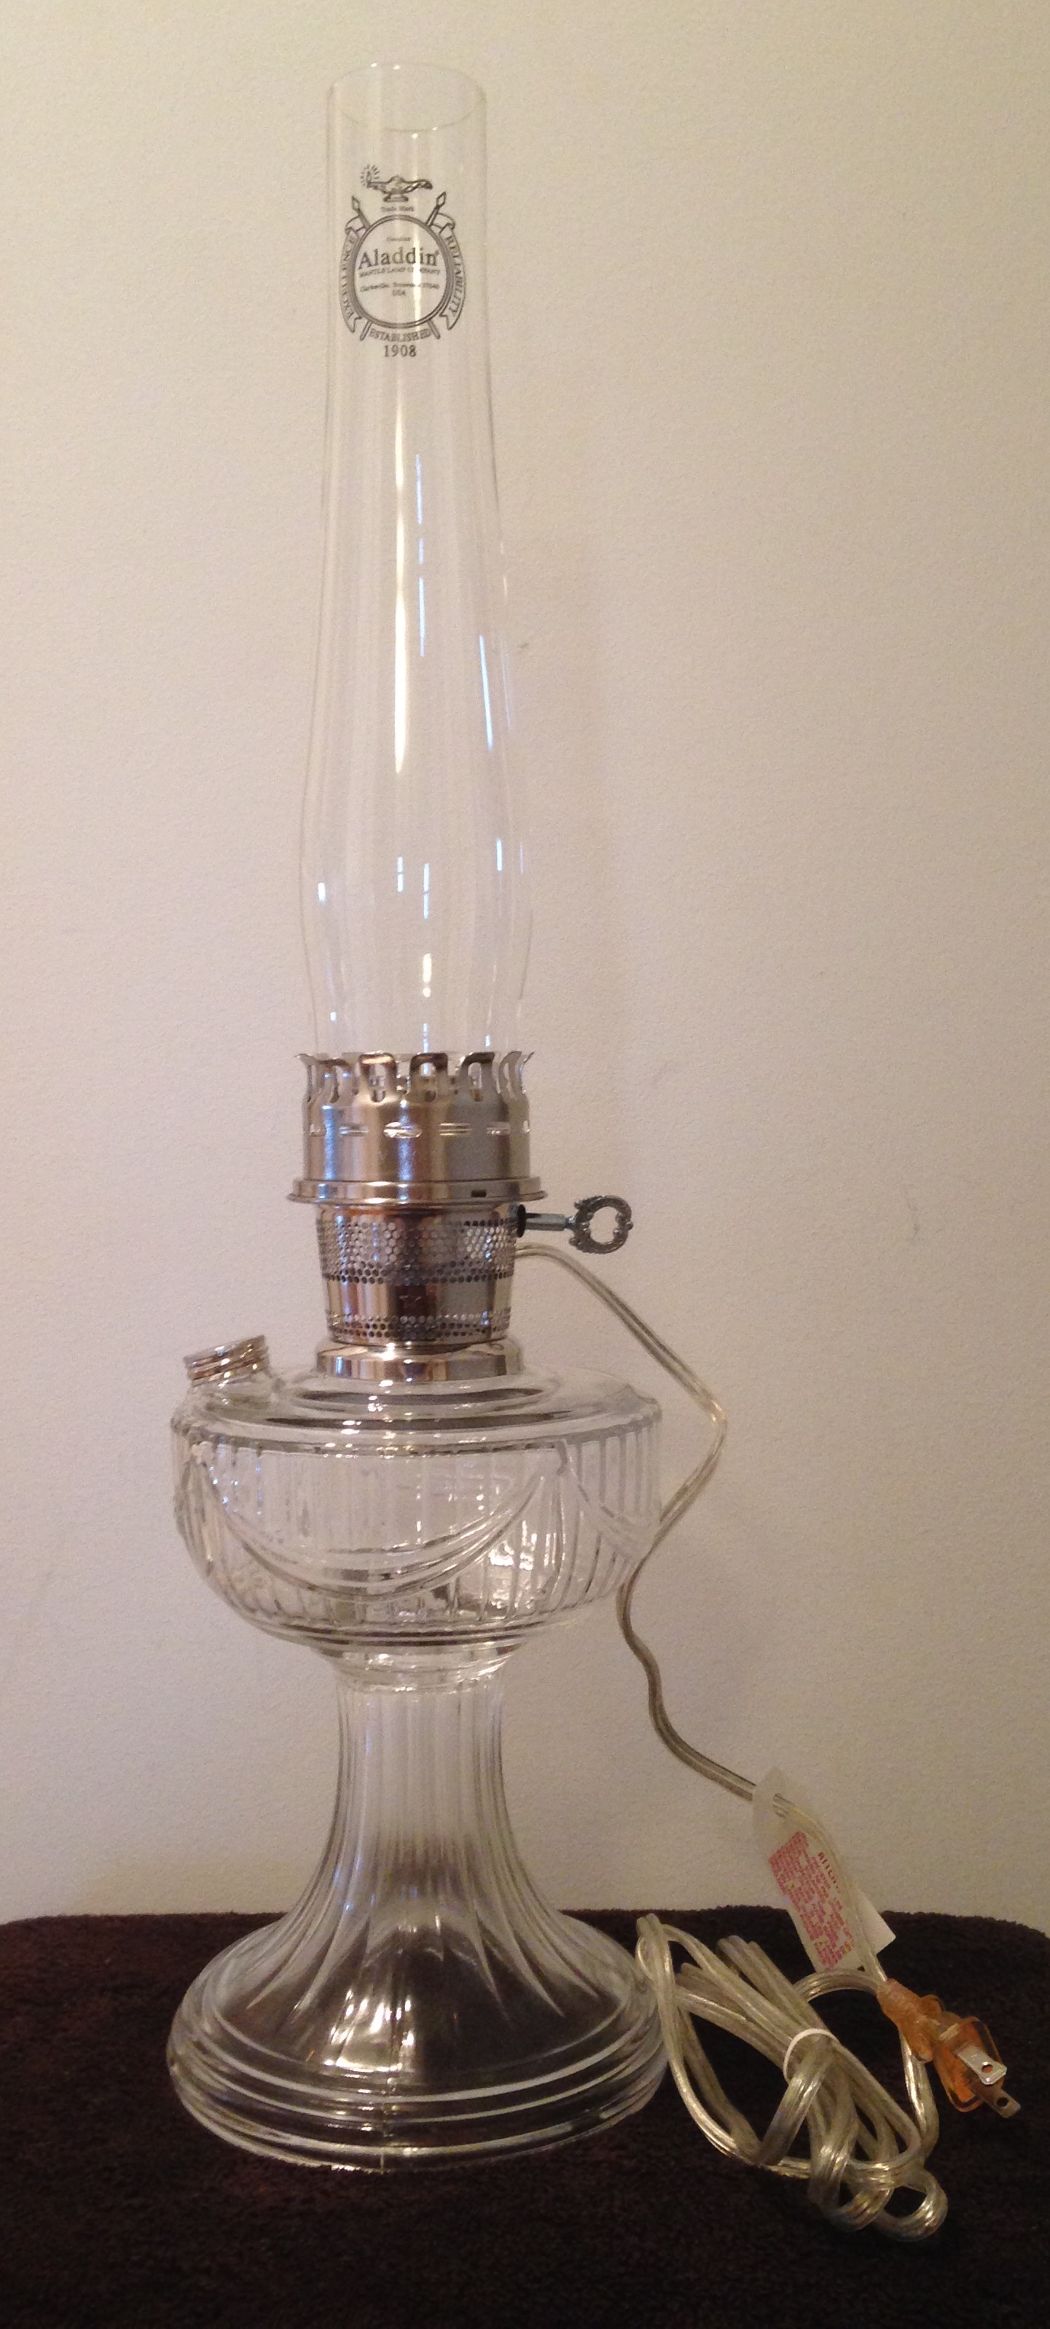 aladin lamp electric conversion nickel